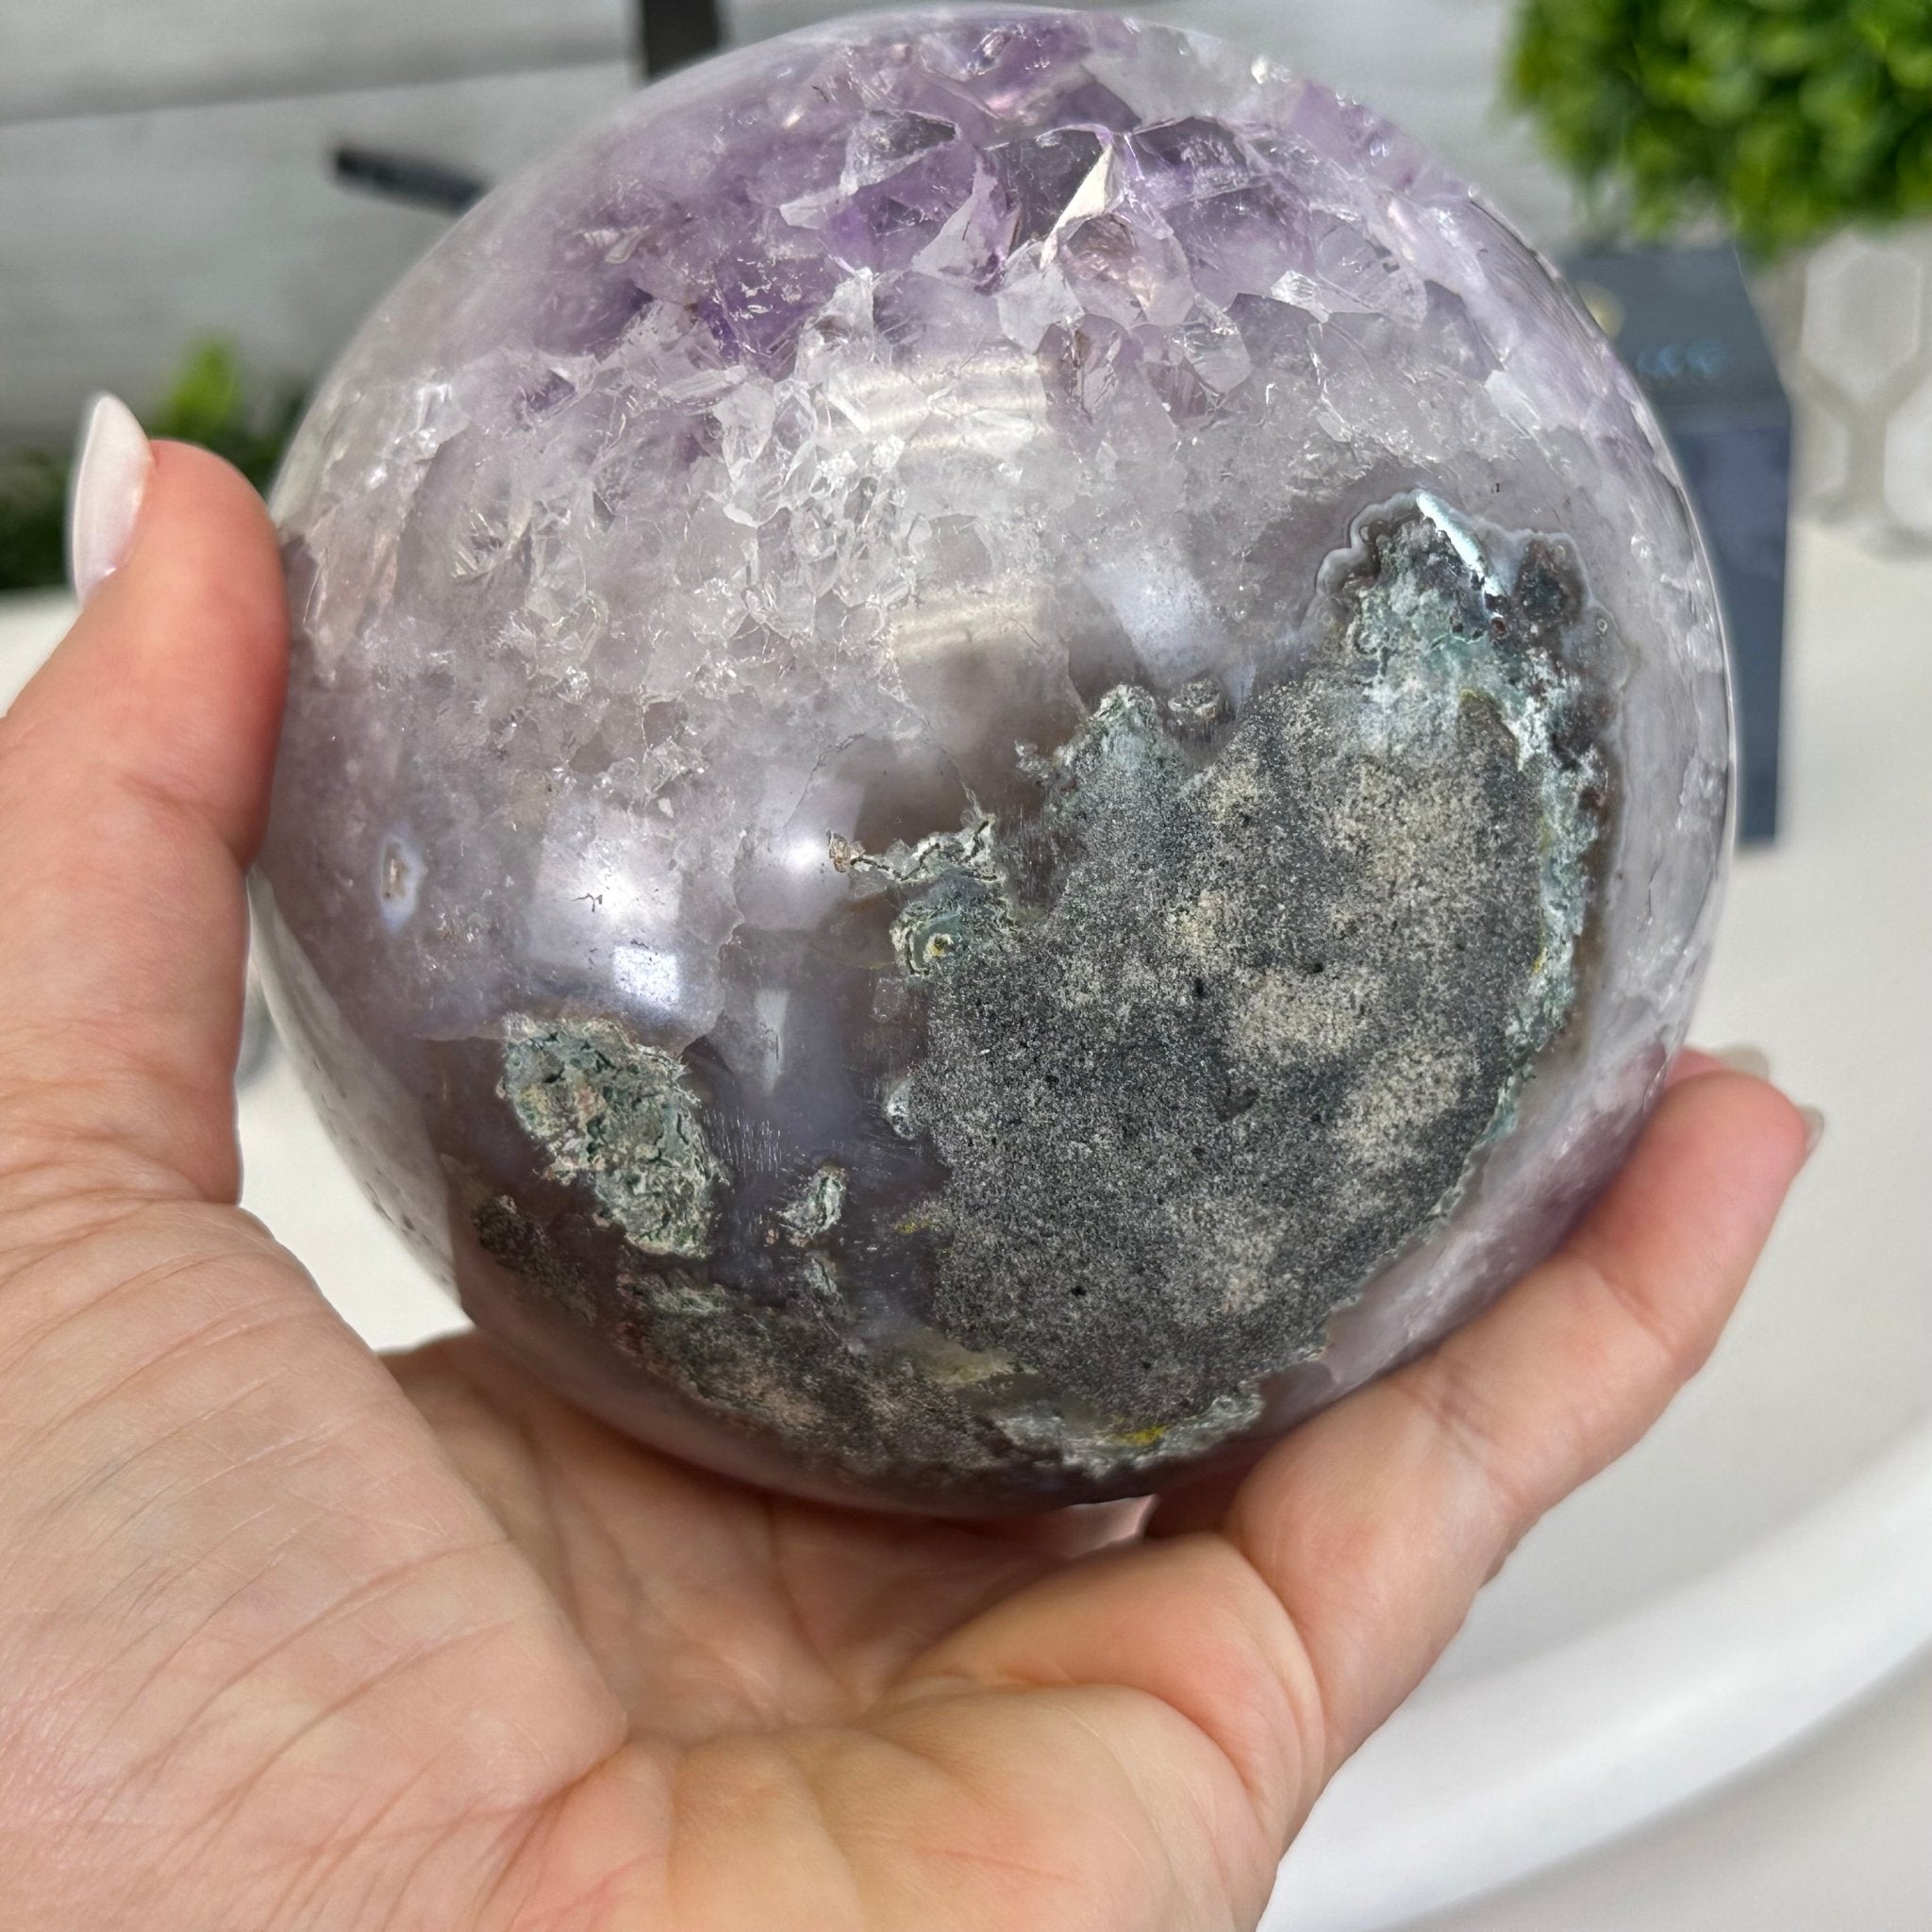 Druzy Amethyst Sphere on a Metal Stand, 4.2 lbs & 9.1" Tall #5630-0061 - Brazil GemsBrazil GemsDruzy Amethyst Sphere on a Metal Stand, 4.2 lbs & 9.1" Tall #5630-0061Spheres5630-0061